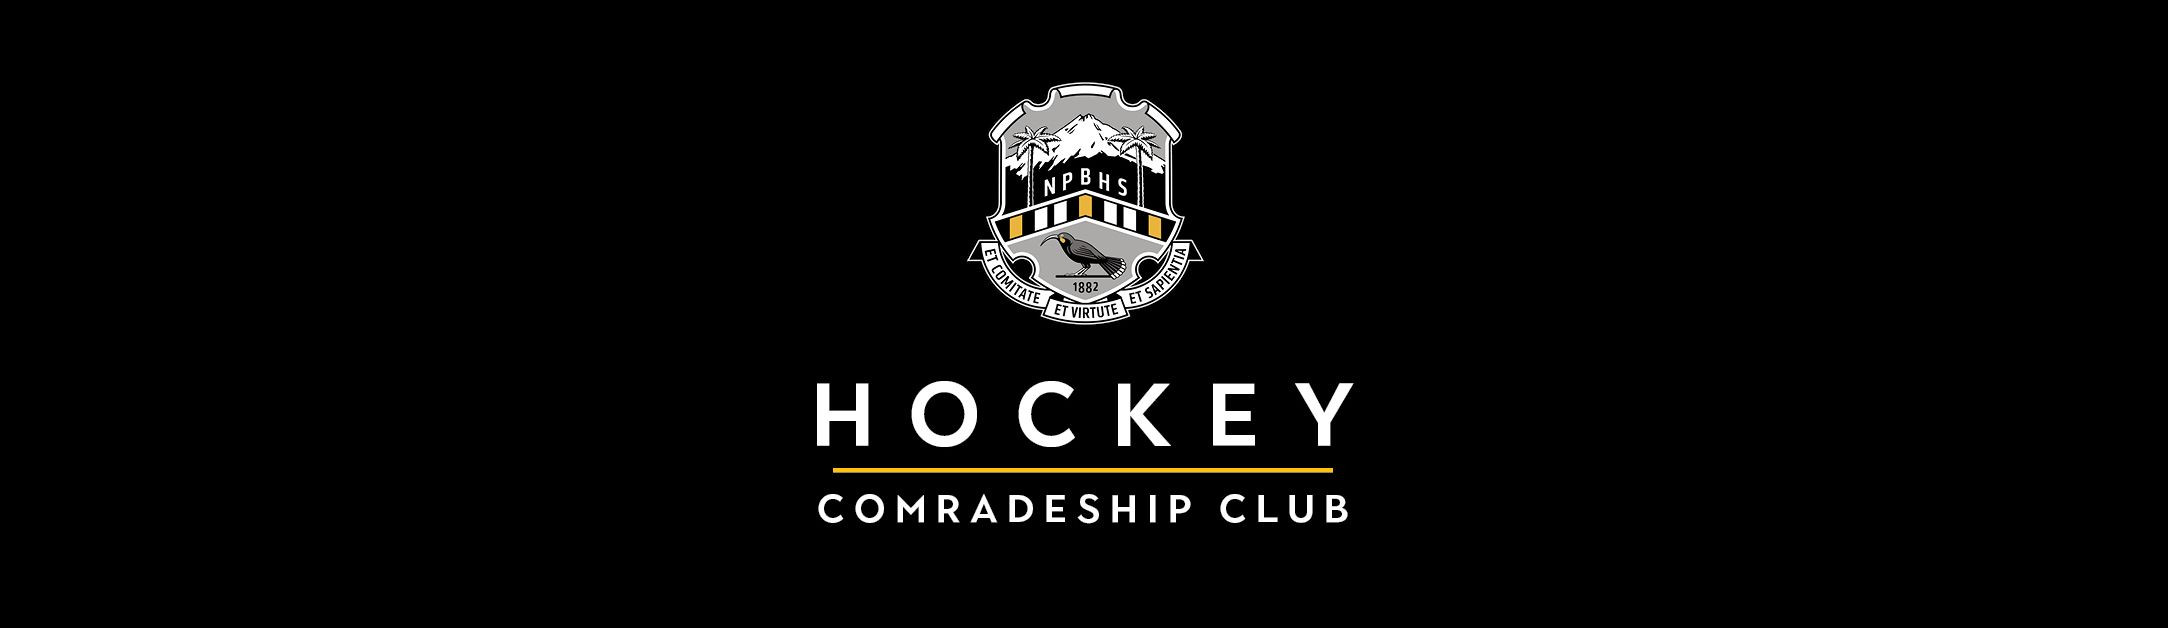 Hockey Comradeship Club Logo